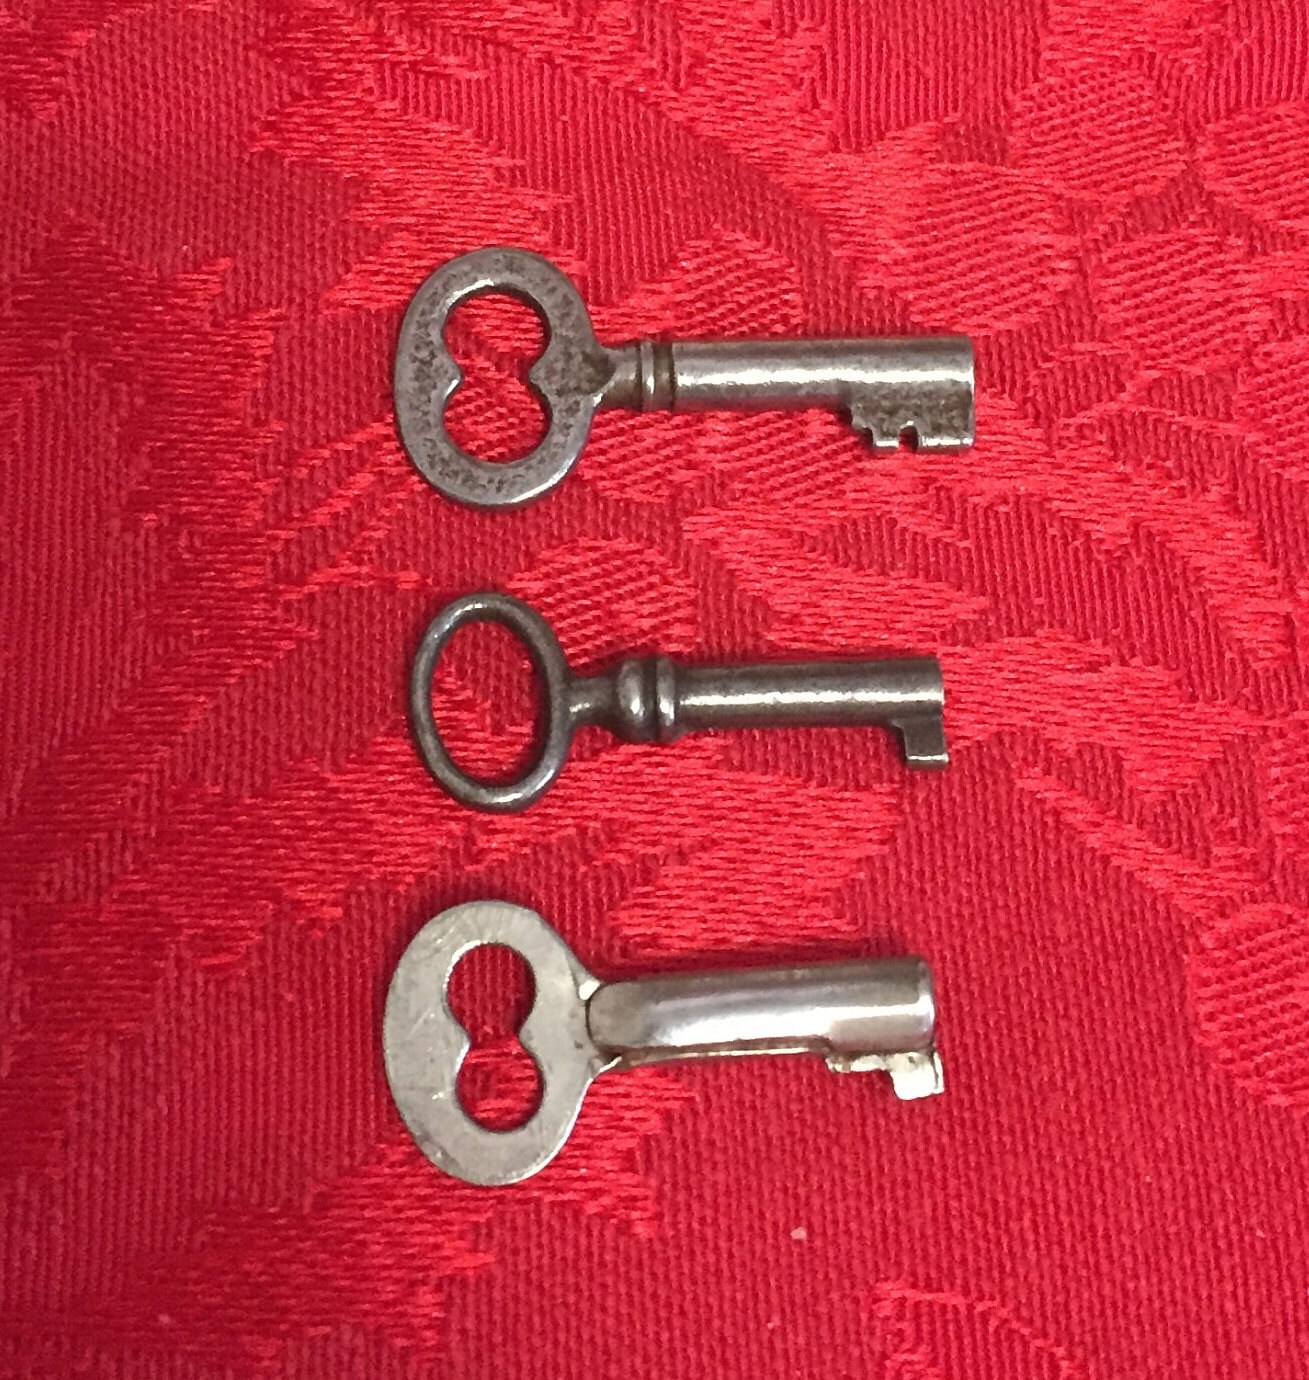 Vintage Keys Lot 6 Pcs. Wholesale Antique Keys for Craft and Decor